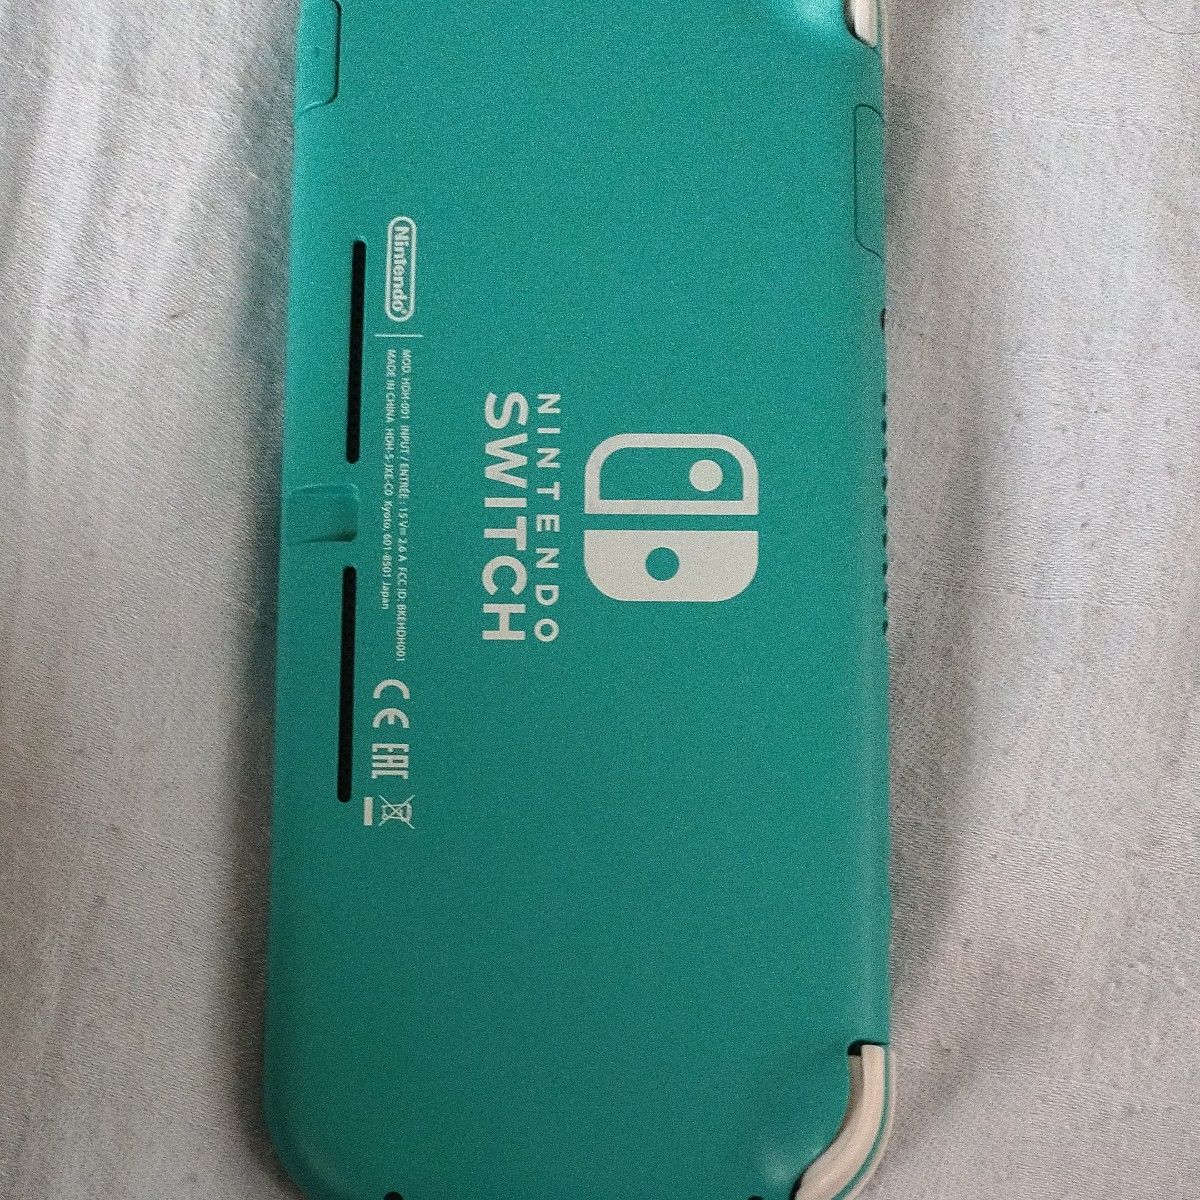 Nintendo Switch Lite ターコイズ と布ポーチと予備保護フィルム付き